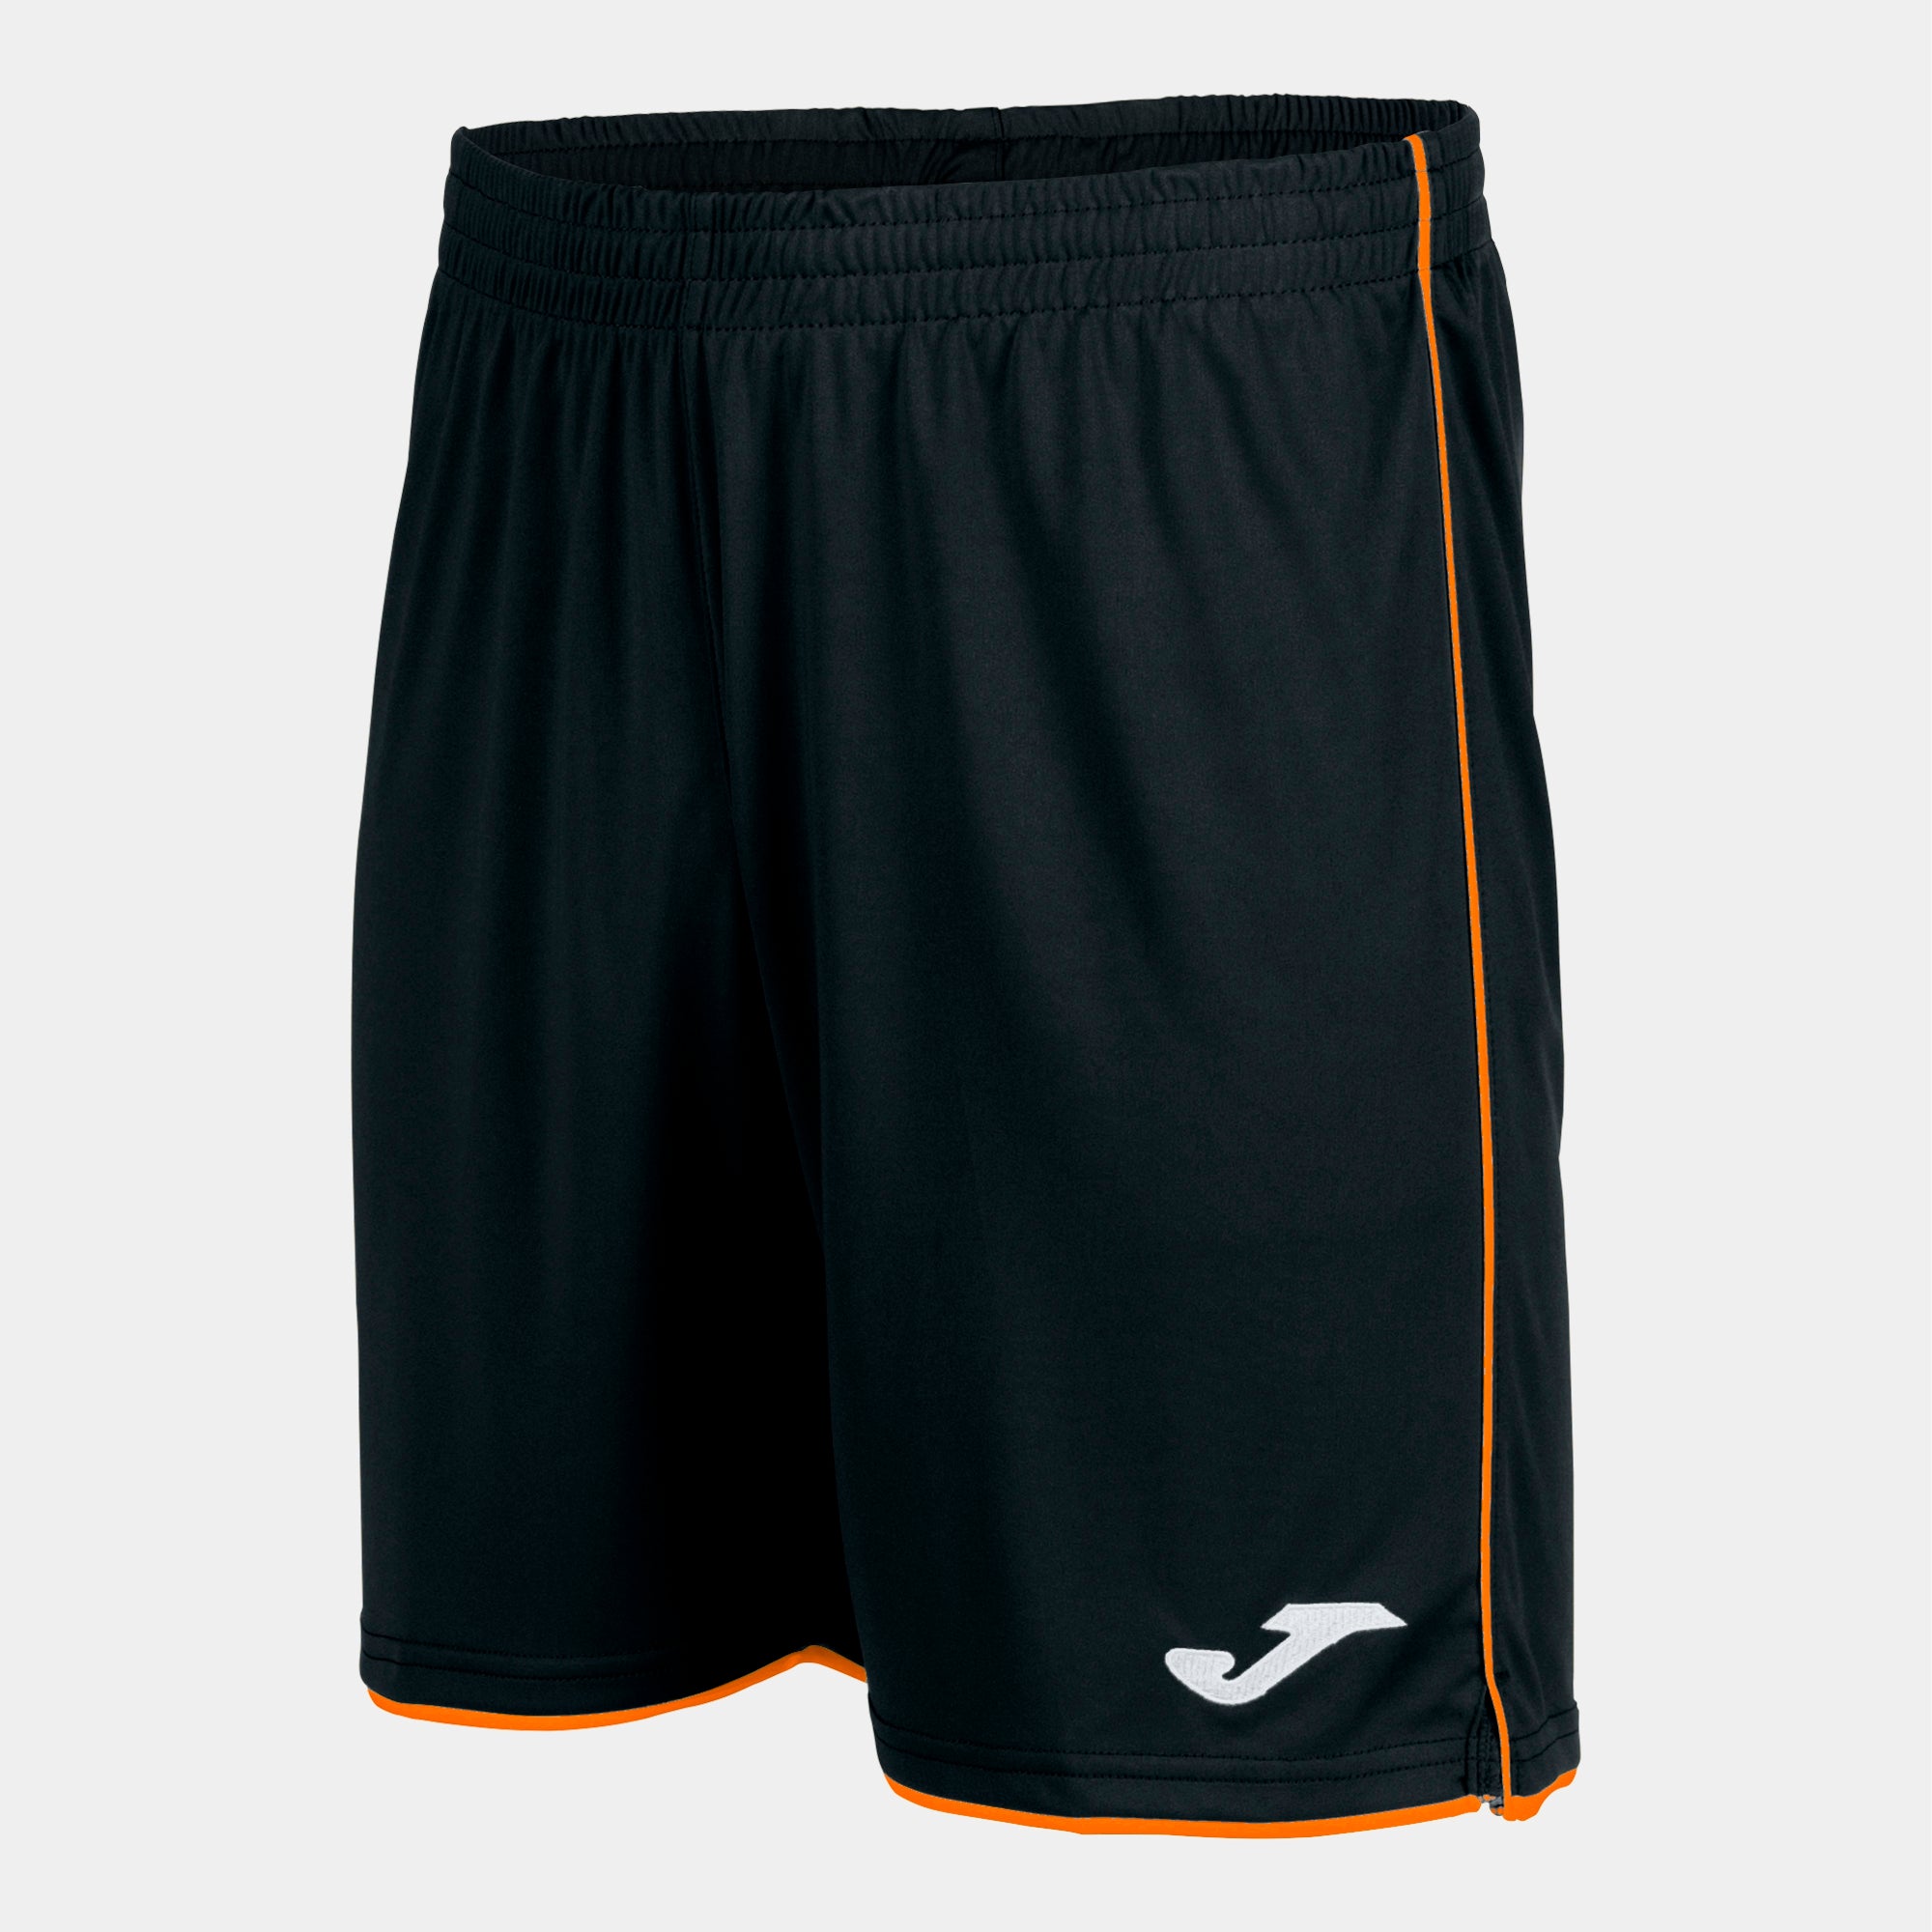 Broadstone - Joma Liga Short - Black/Orange